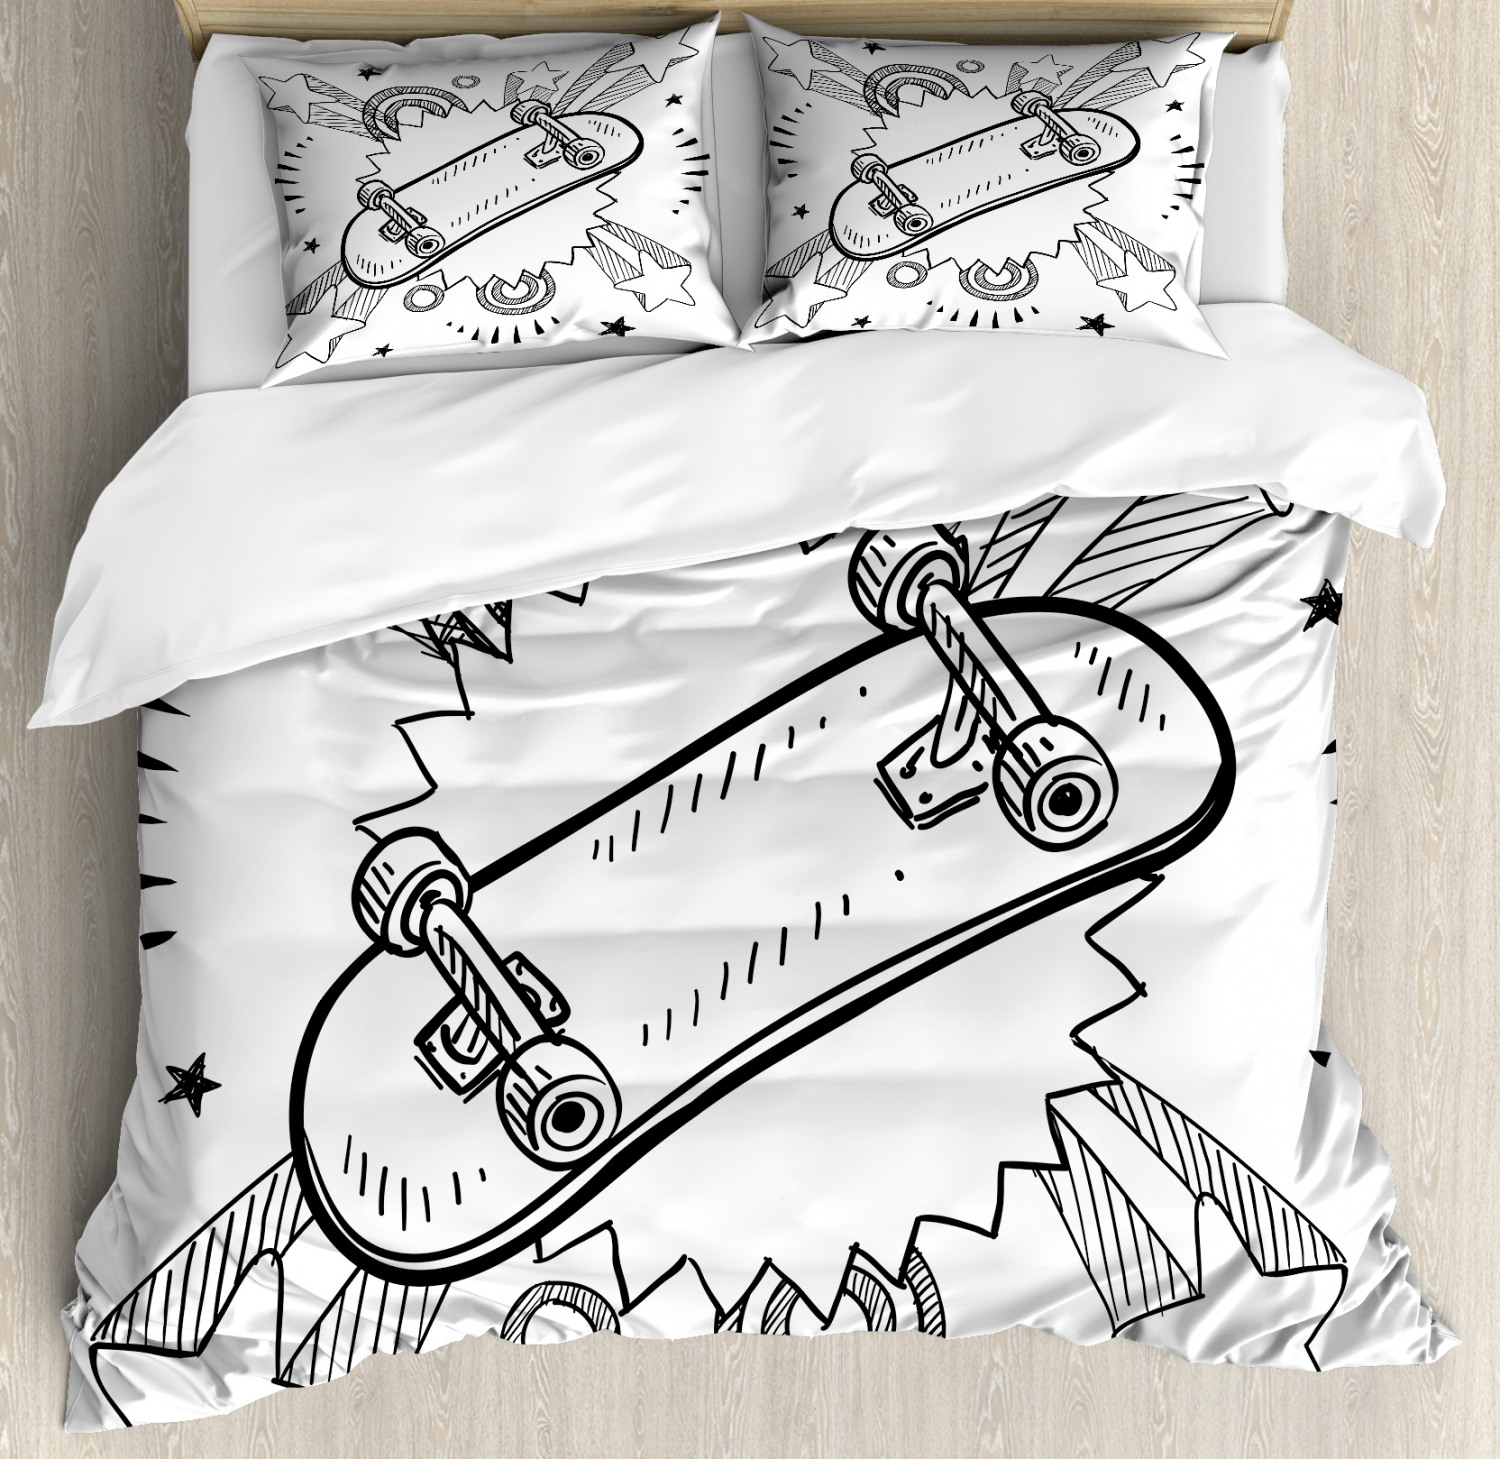 Sketch Duvet Cover Set With Pillow Shams Skateboard Pop Art Style